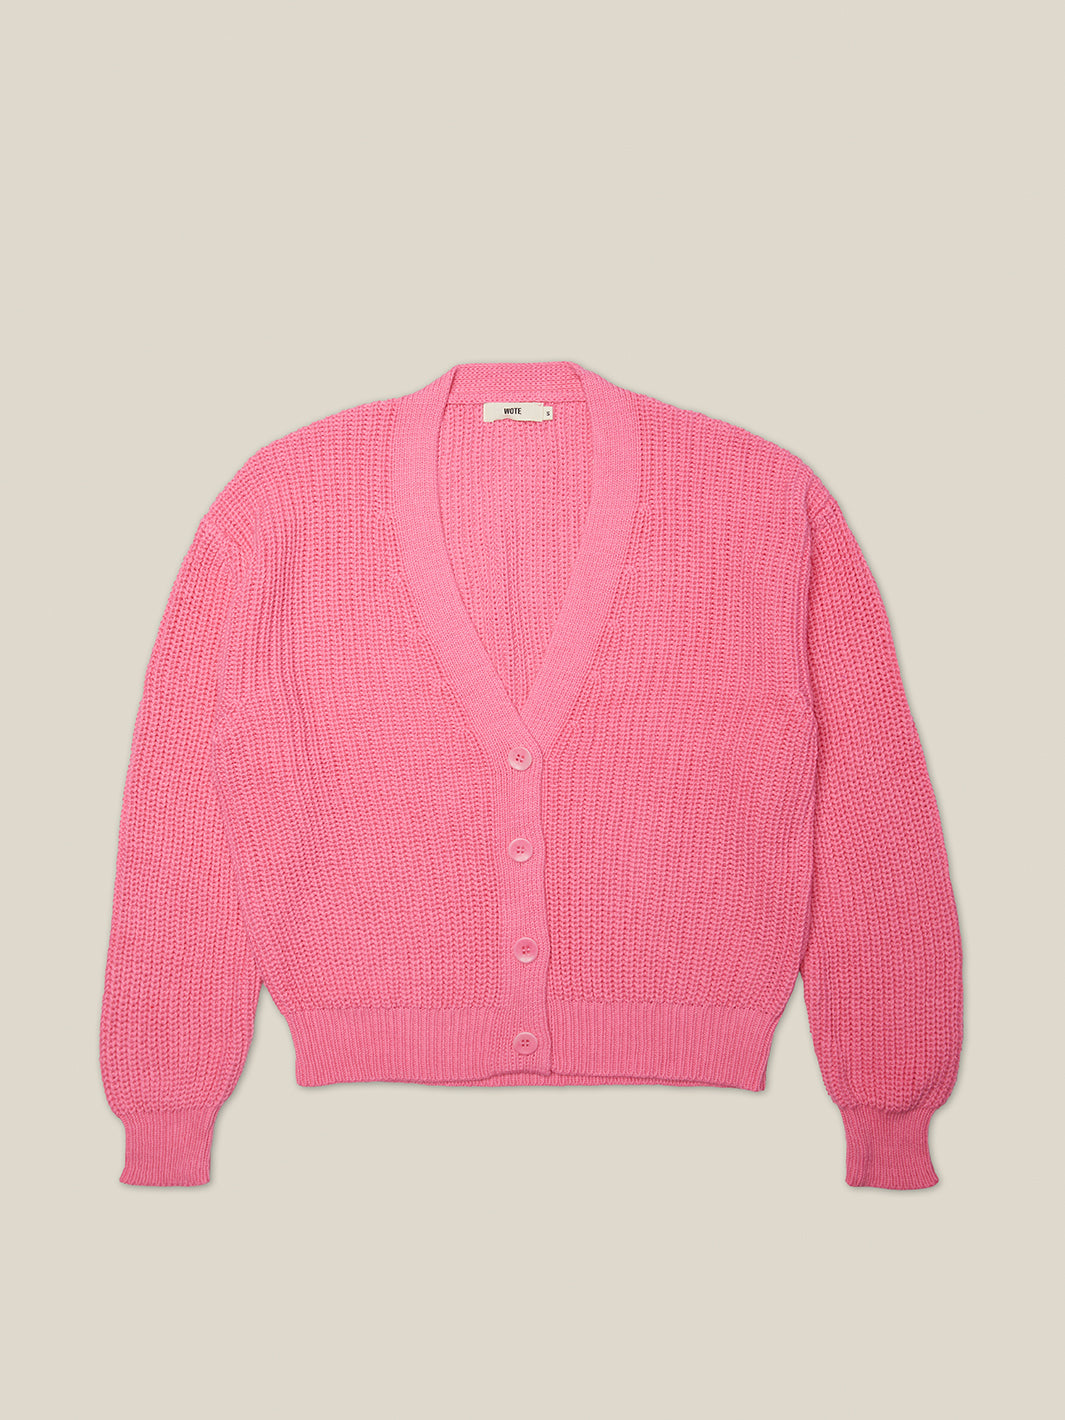 Damen Strickjacke pink 100% Bio Baumwolle GOTS zertifiziert made in Italy